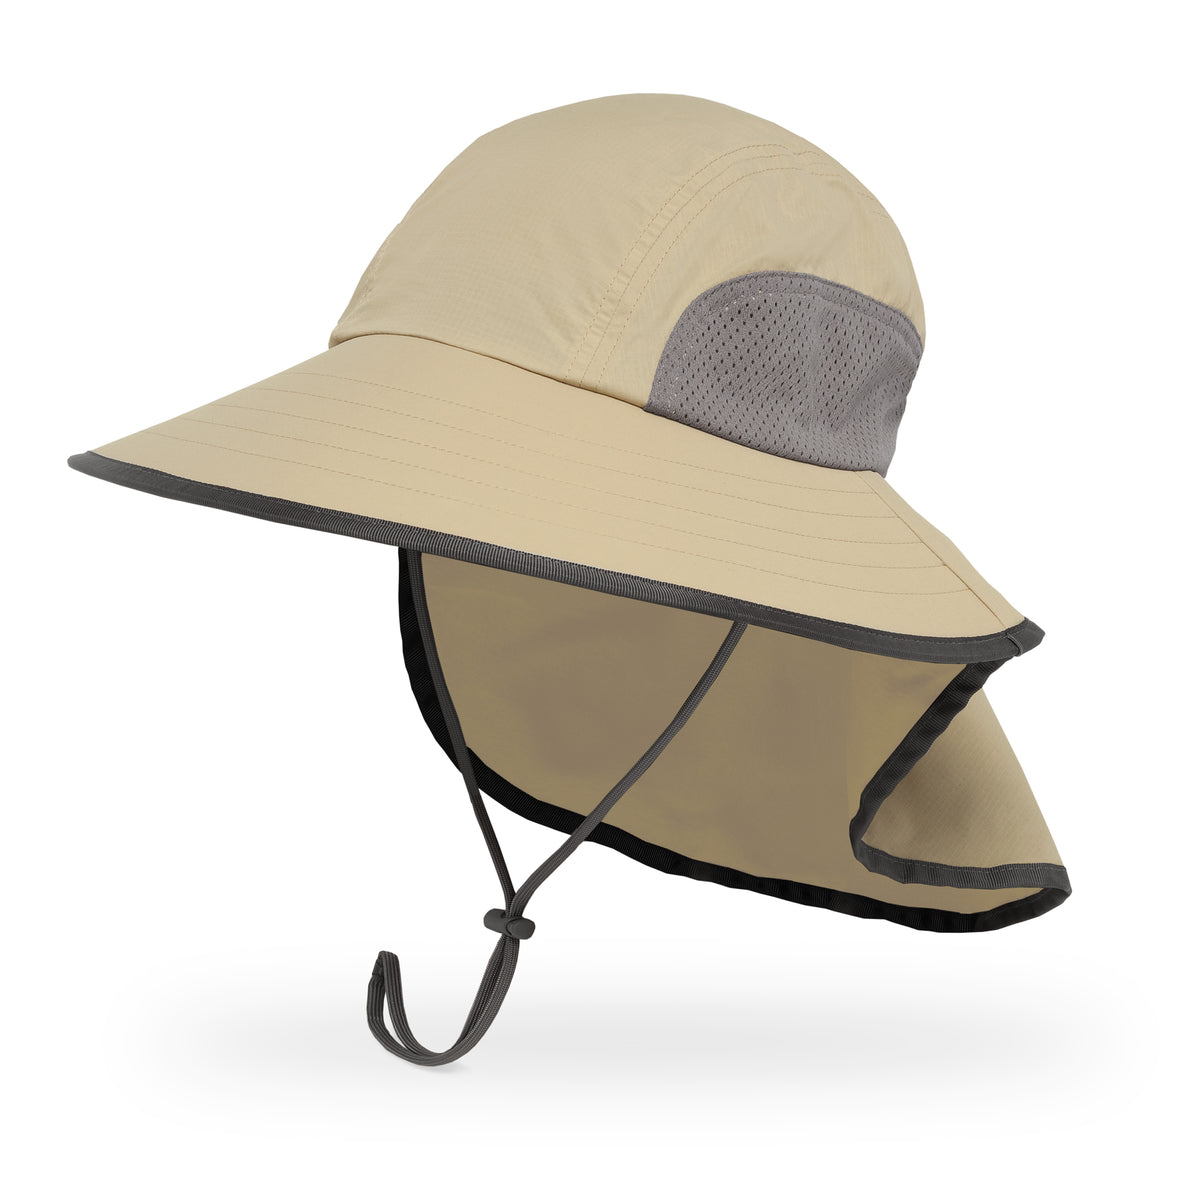 Custom Mustache Questions Bucket Hat Sun Hat Fishing Hat 